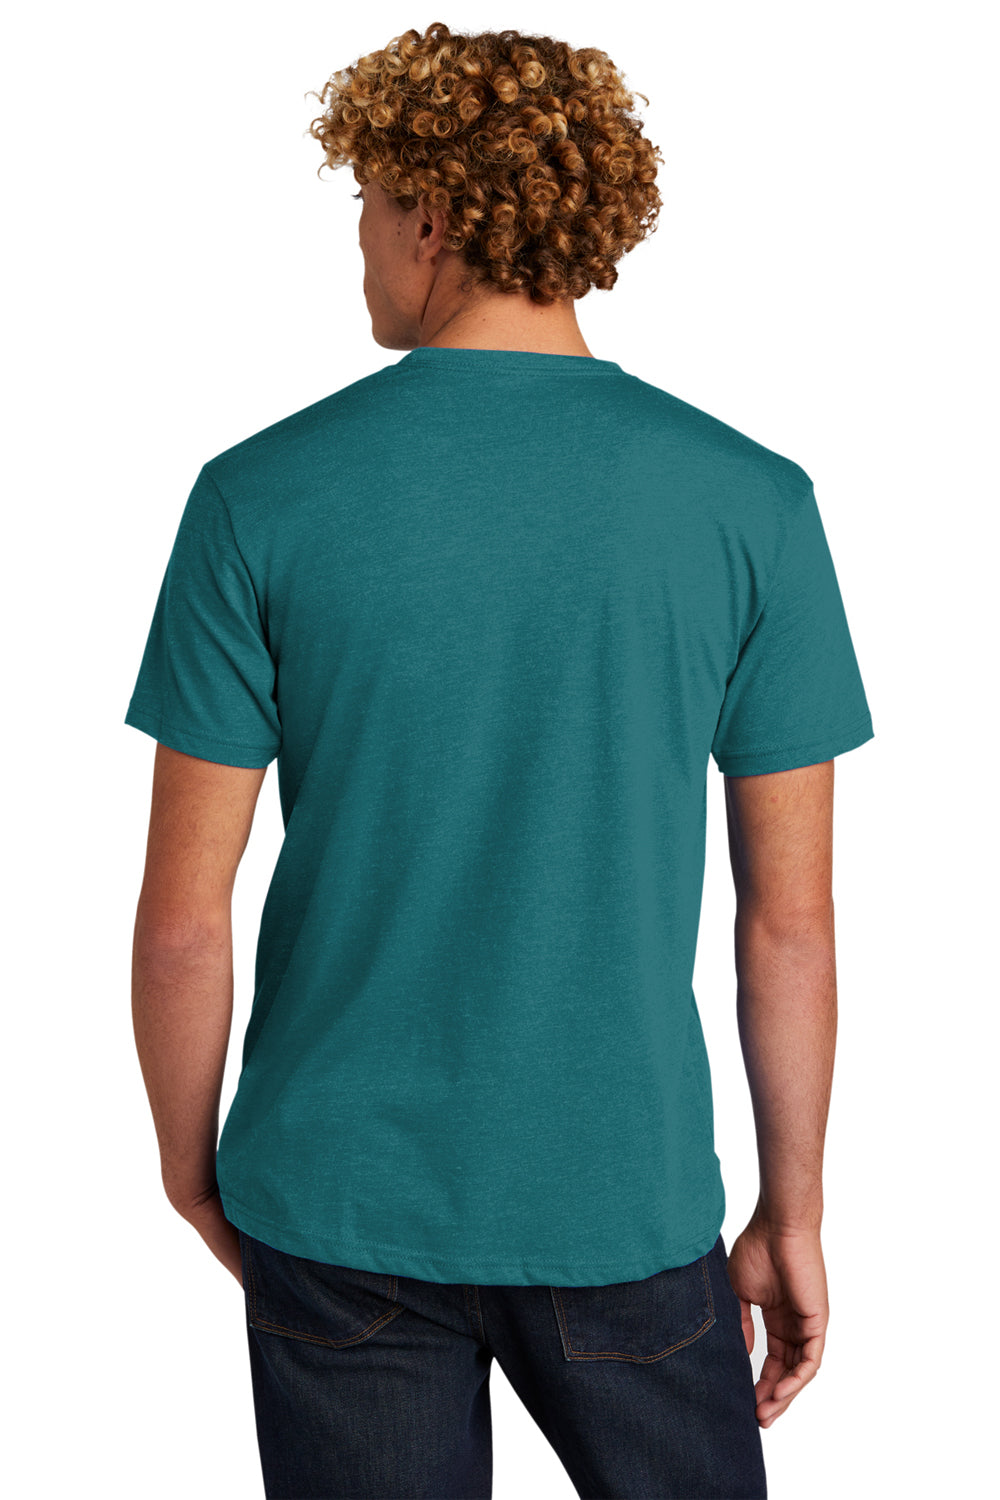 Next Level NL6210/N6210/6210 Mens CVC Jersey Short Sleeve Crewneck T-Shirt Teal Blue Back